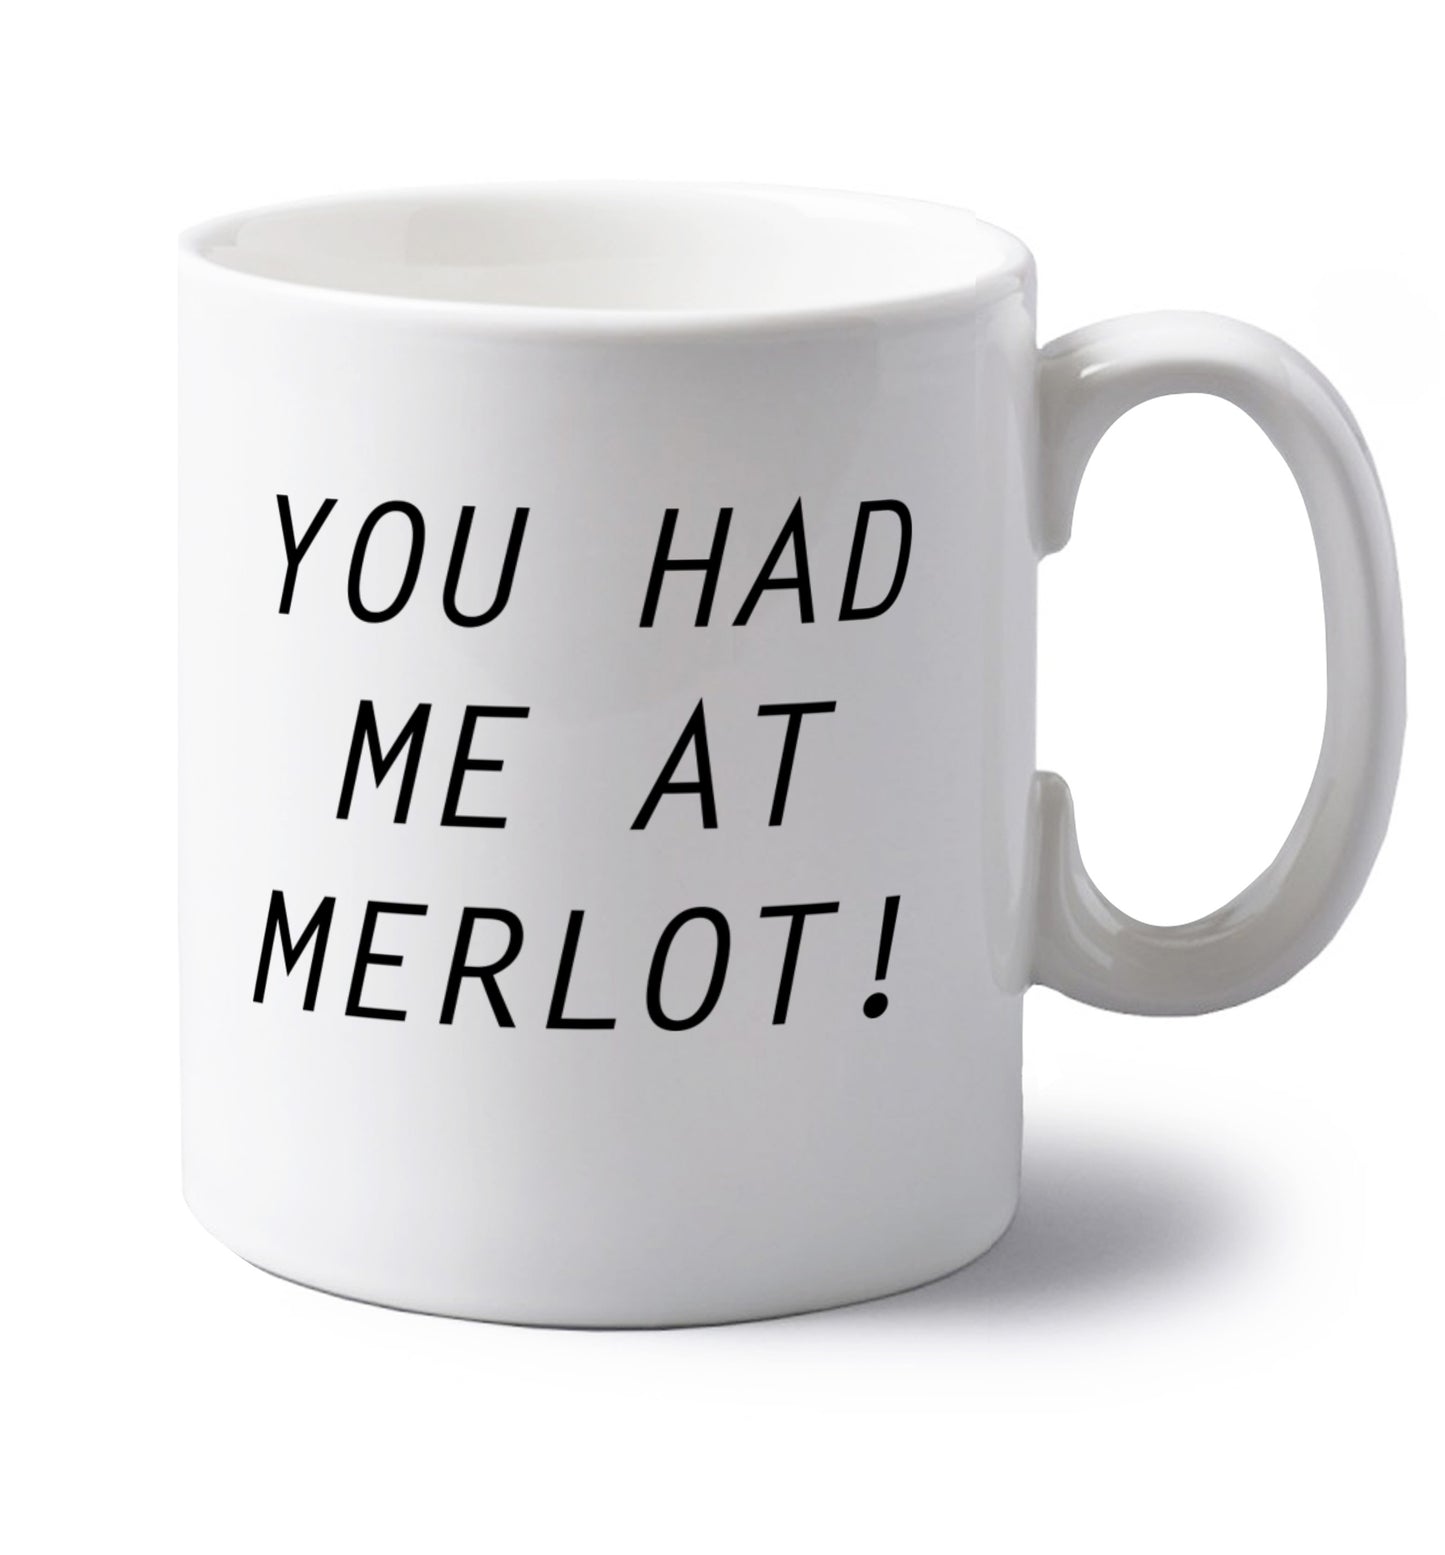 You had me at merlot left handed white ceramic mug 